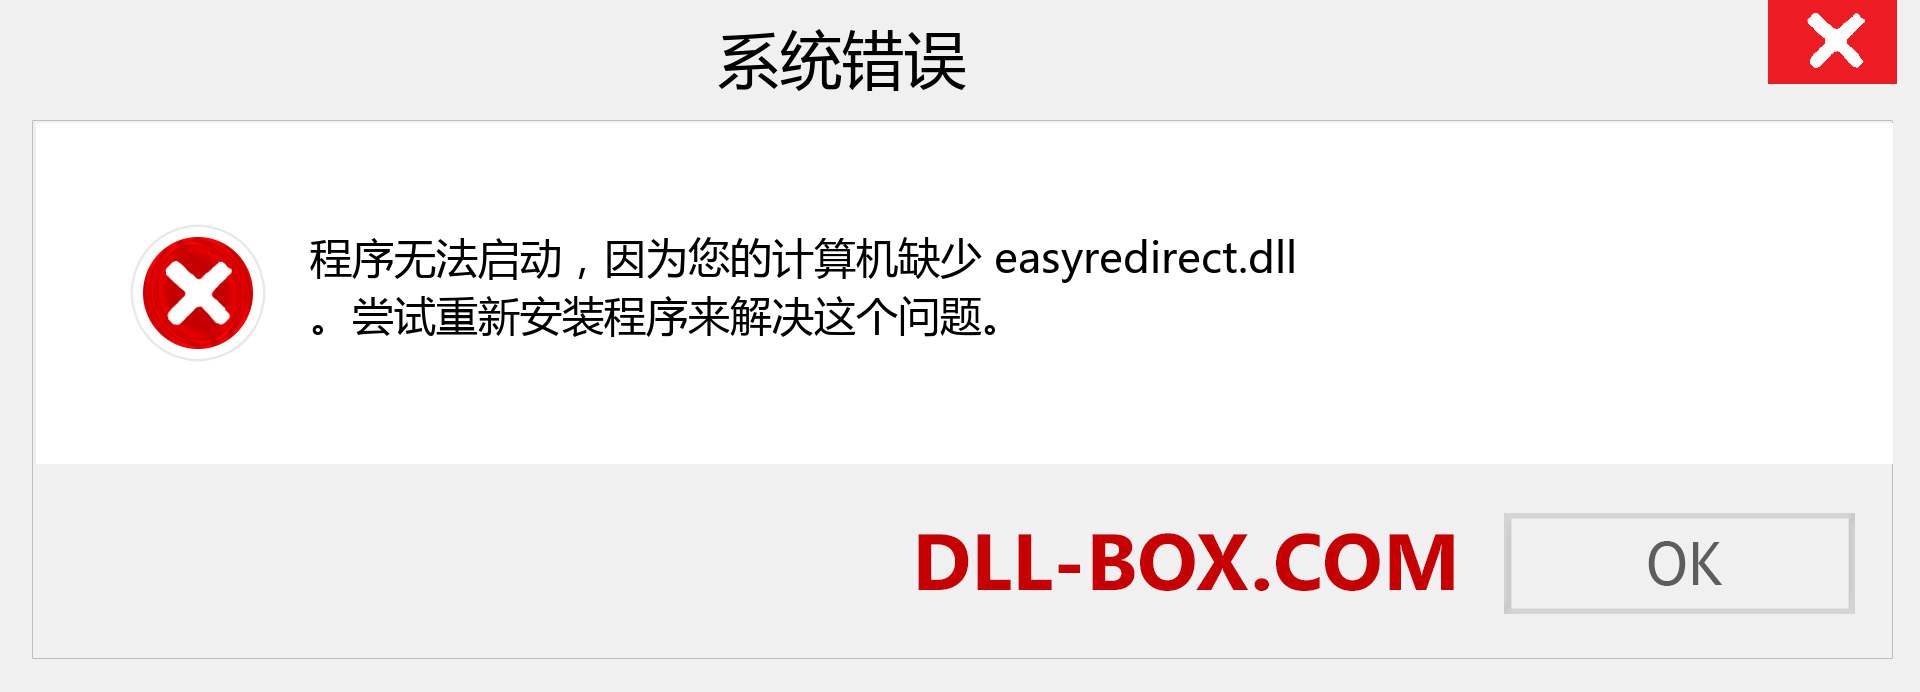 easyredirect.dll 文件丢失？。 适用于 Windows 7、8、10 的下载 - 修复 Windows、照片、图像上的 easyredirect dll 丢失错误